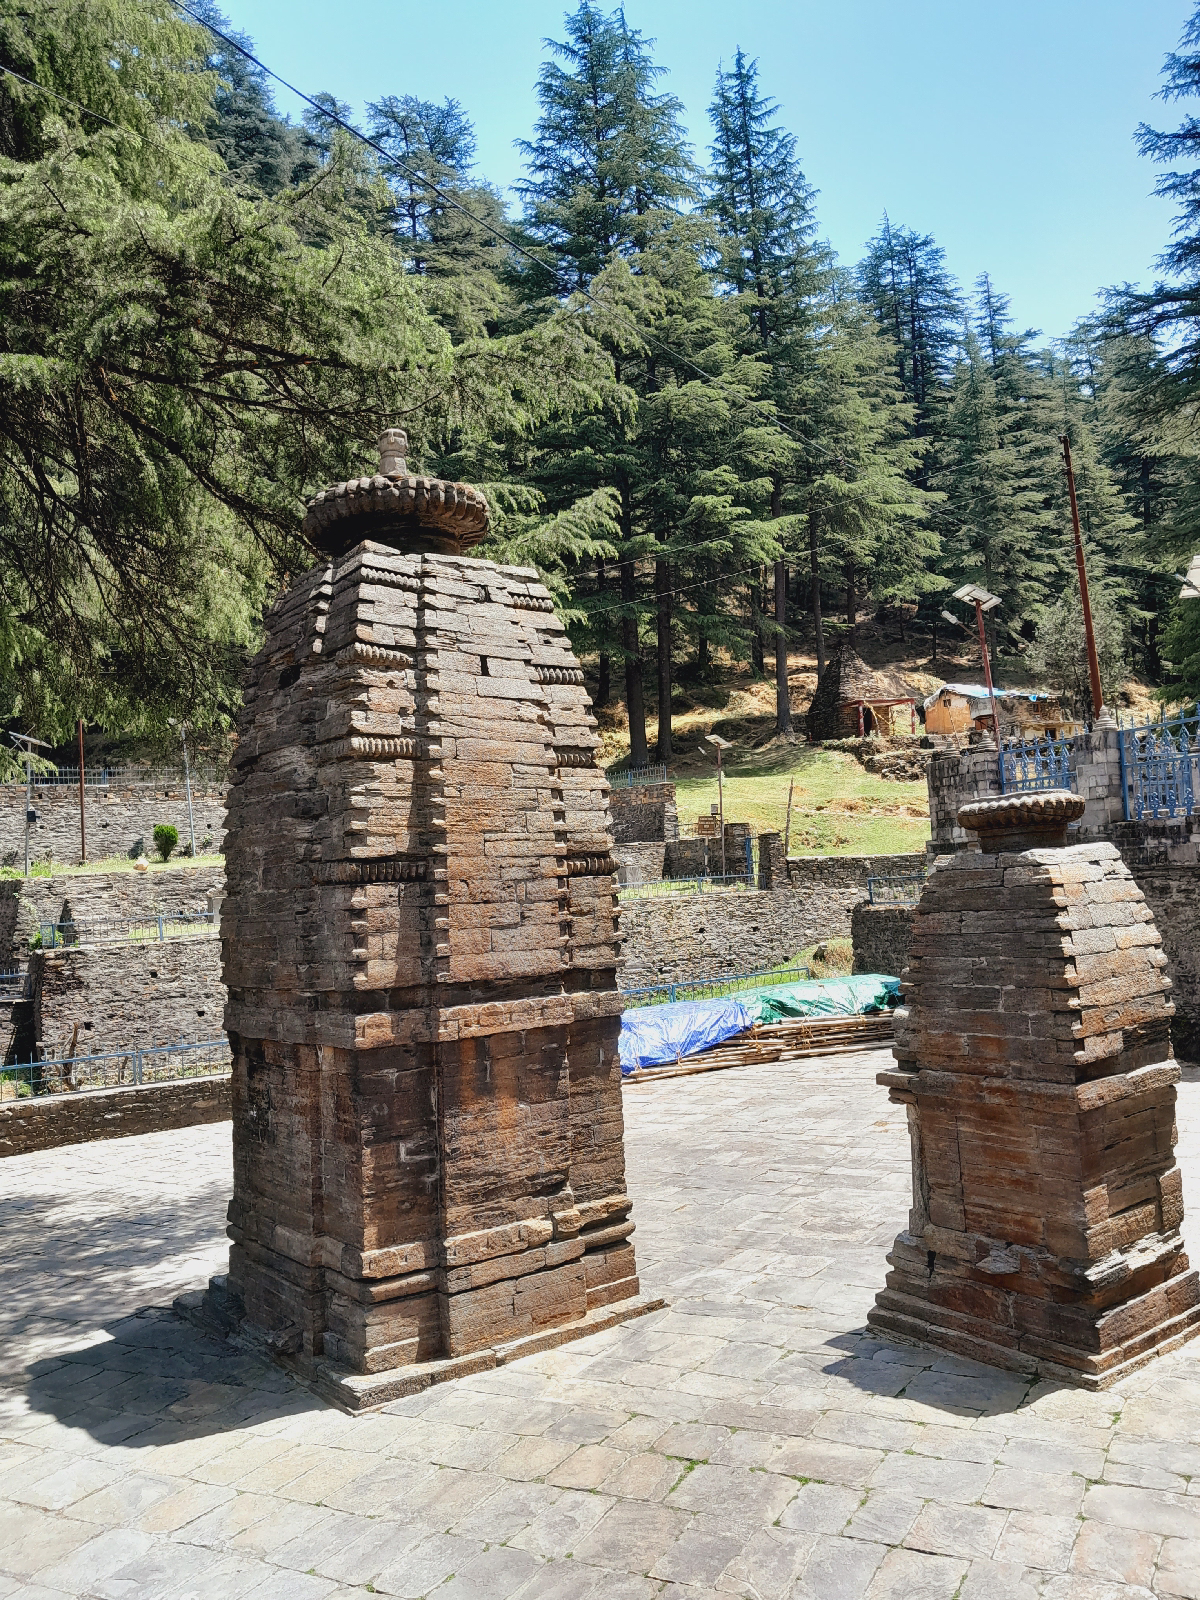 Jageswar Temple in Uttarakhand